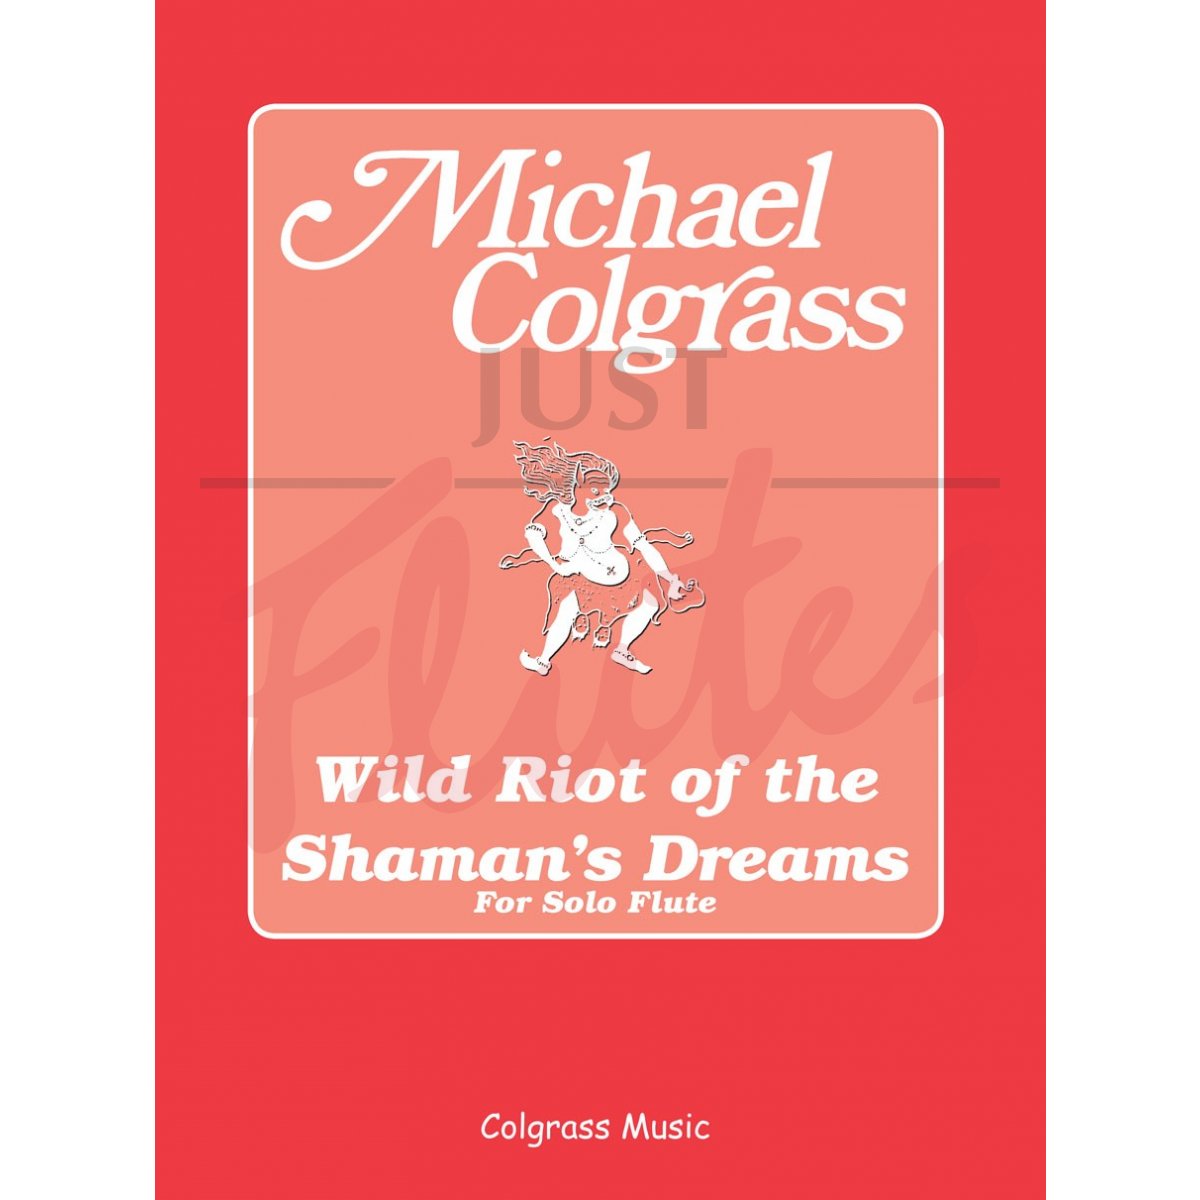 Wild Riot of the Shaman's Dreams